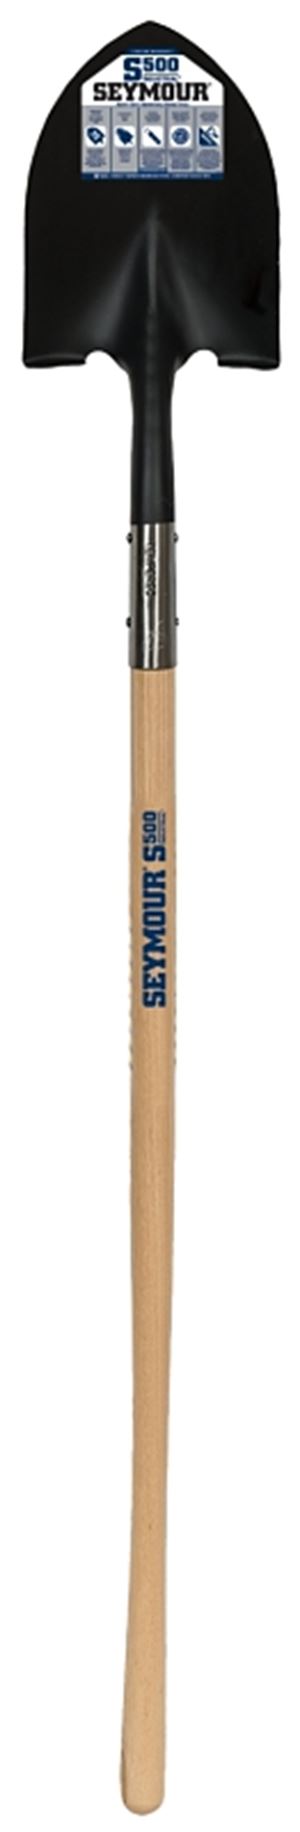 Seymour 49344 Shovel, 9-1/2 in W Blade, 14 ga, Steel Blade, Hardwood Handle, Long Handle, 48 in L Handle